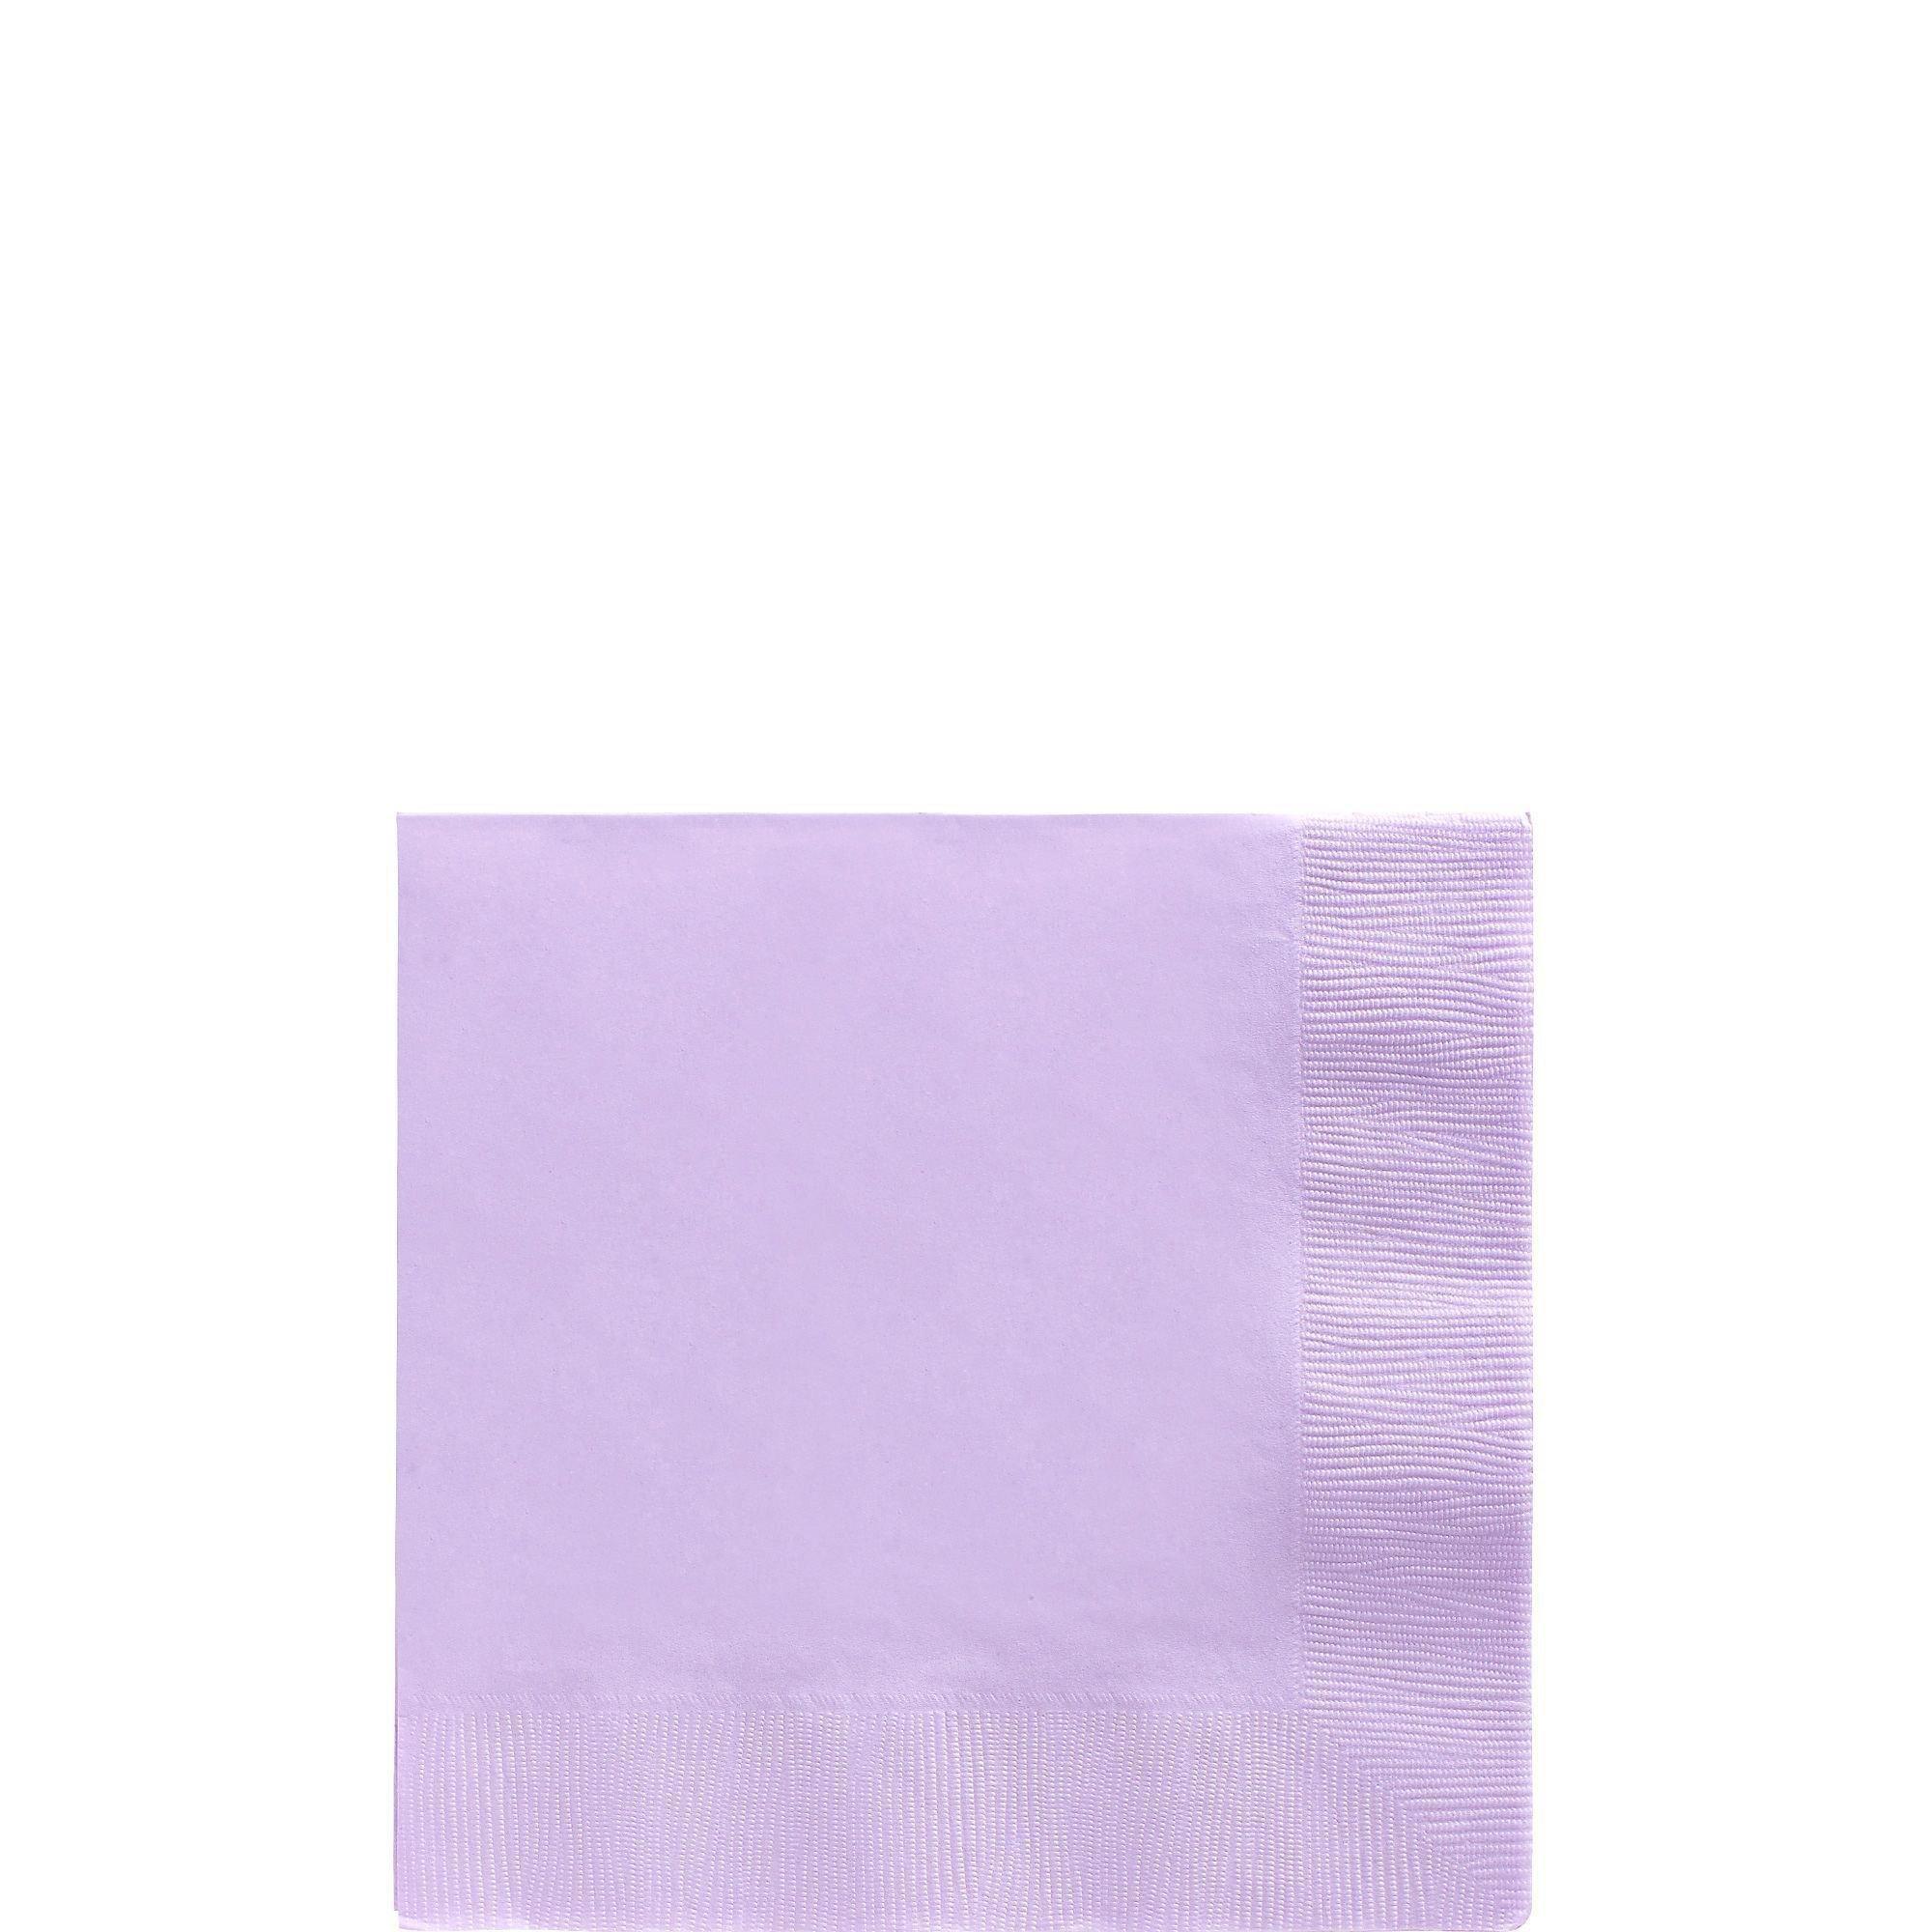 Lavender Paper Tableware Kit for 20 Guests